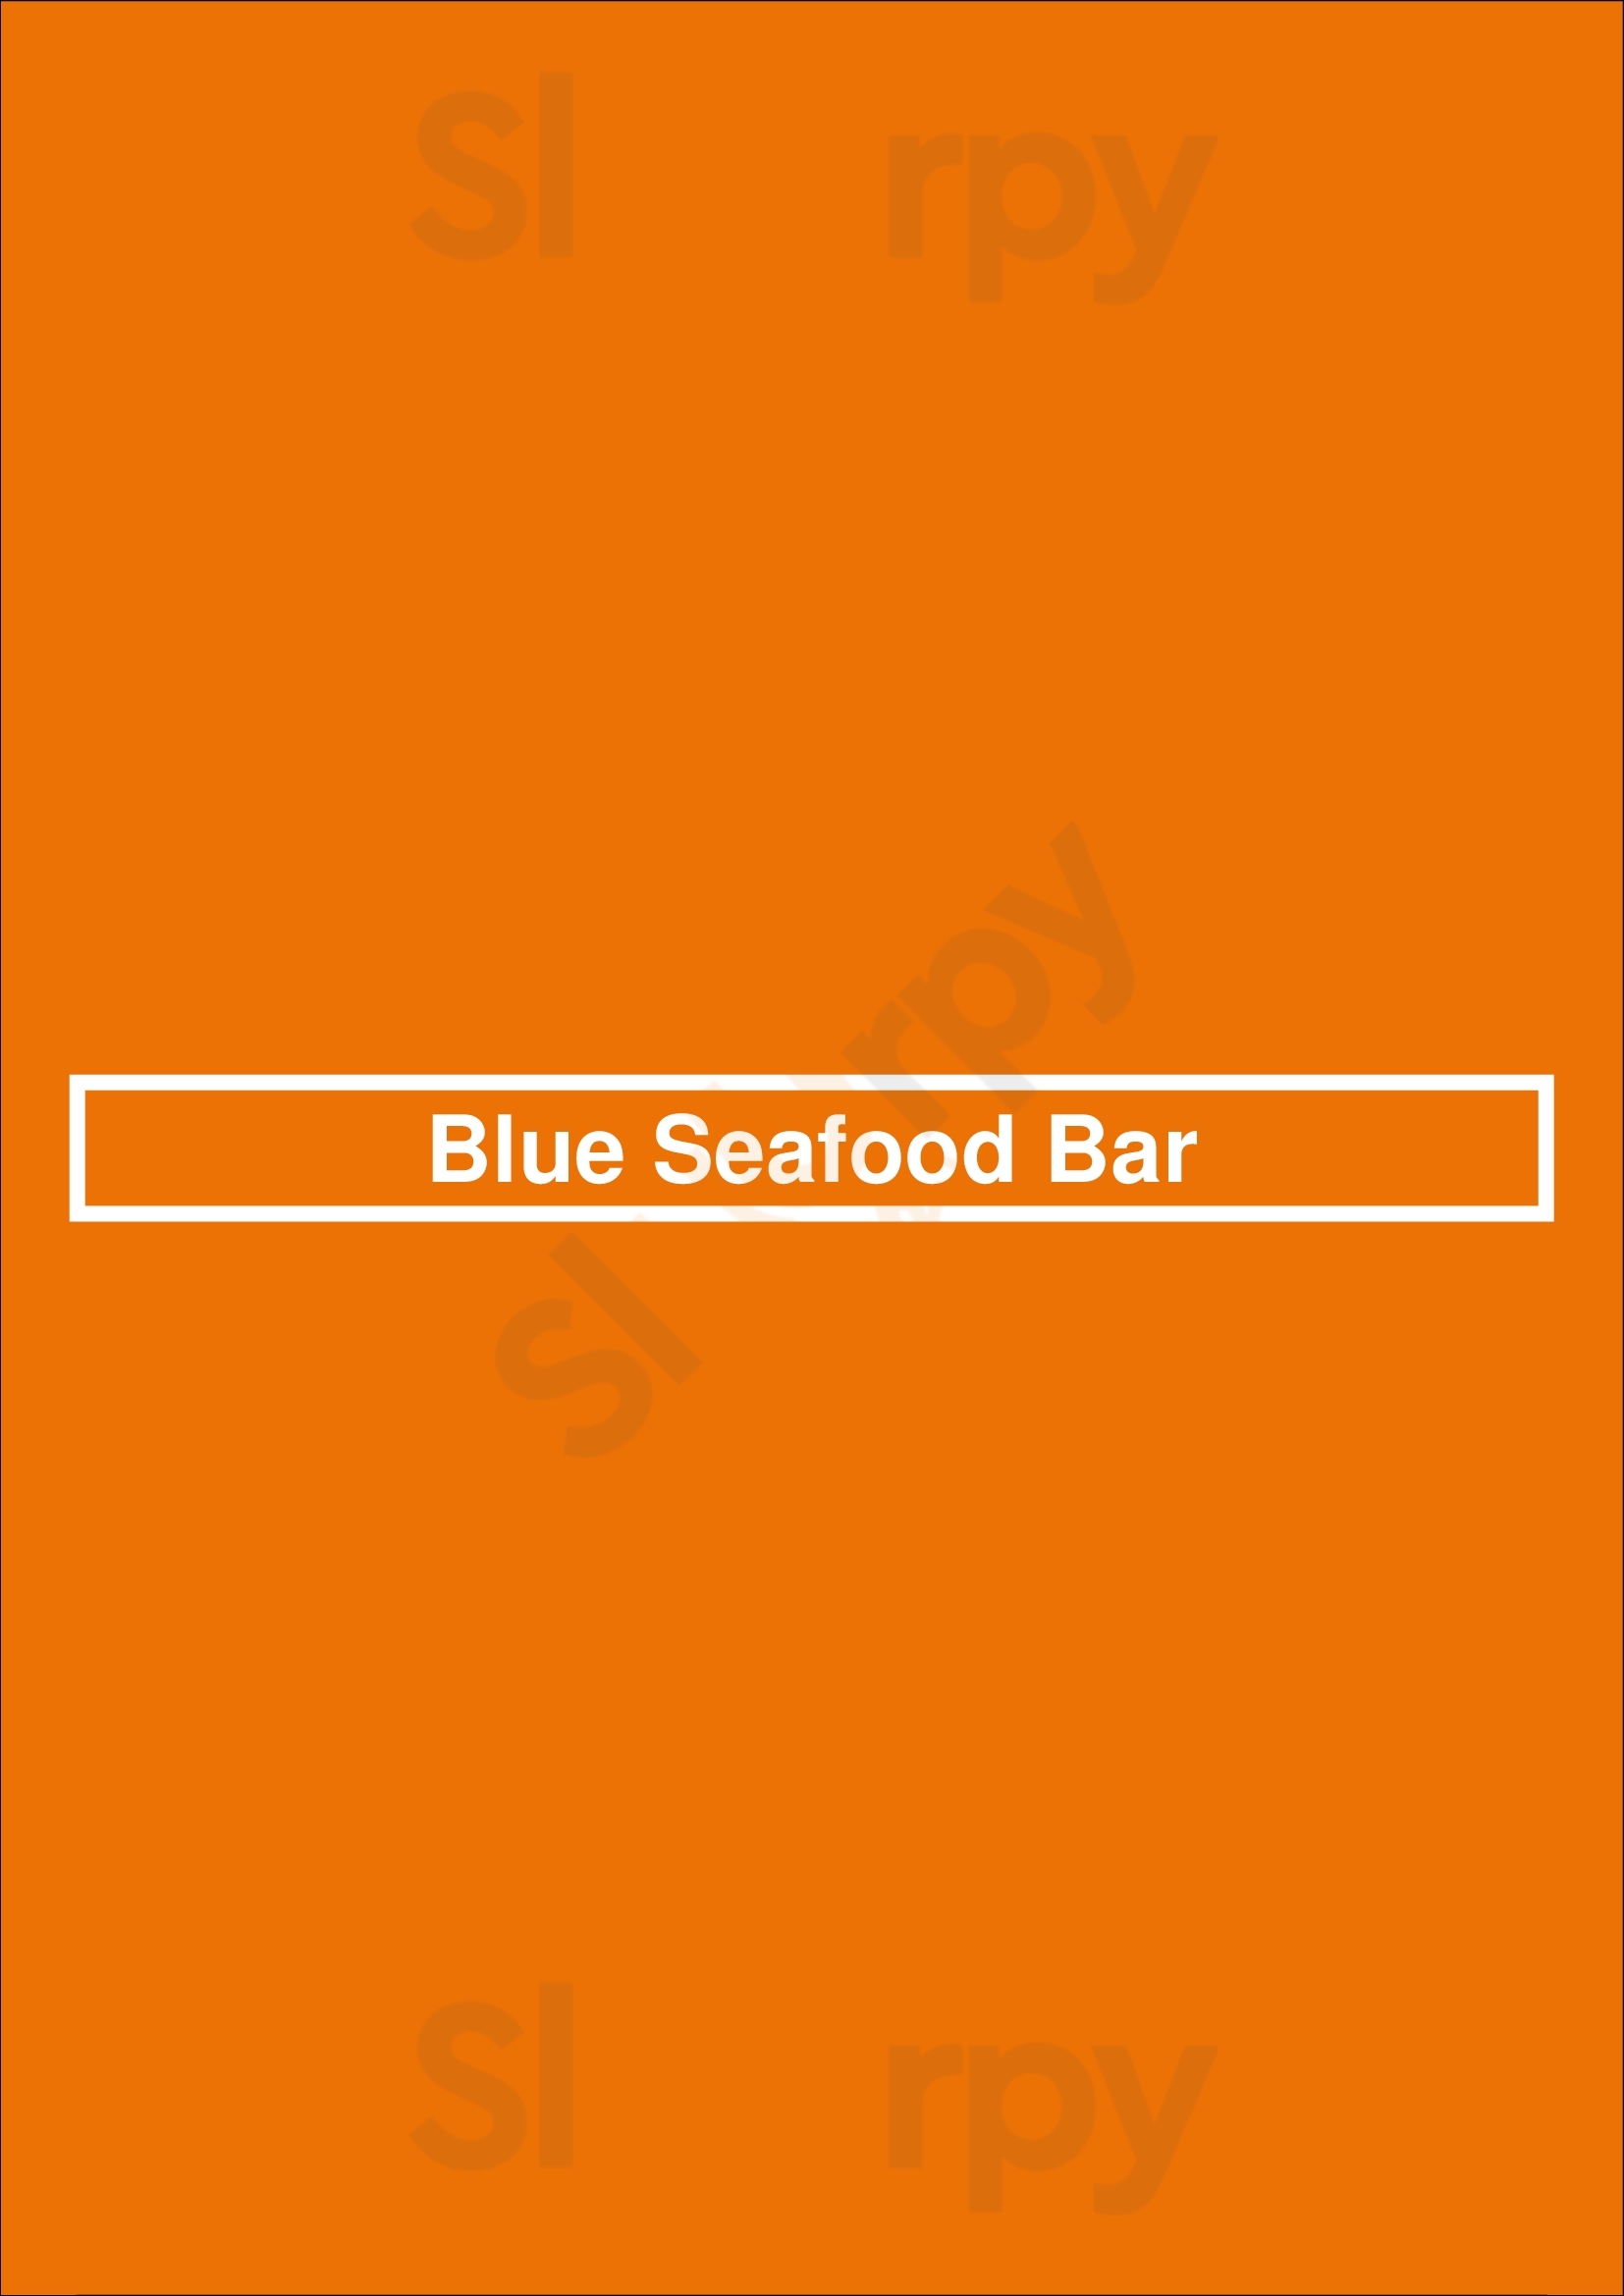 Blue Seafood Bar New York City Menu - 1